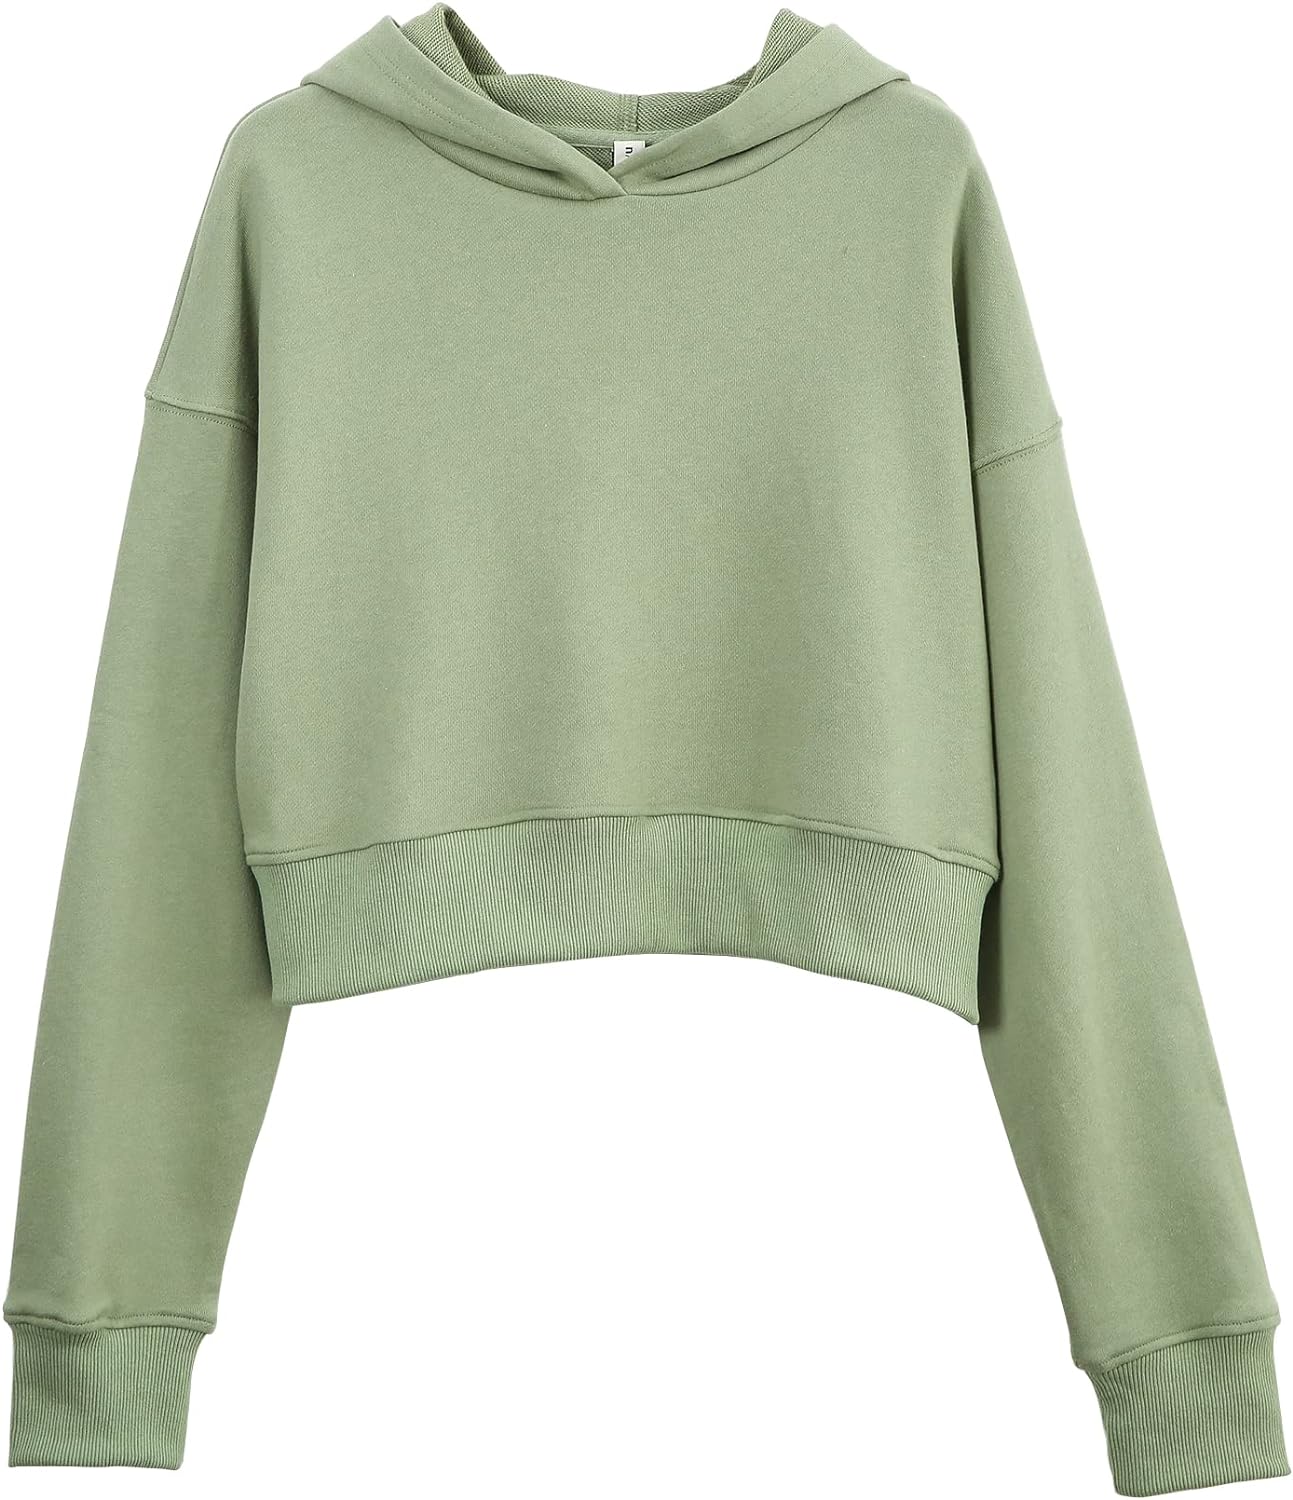 NTG Fad Green / Large Amazhiyu Women’s Cropped Hoodie with Hood Casual Long Sleeve Crop Top Sweatshirt